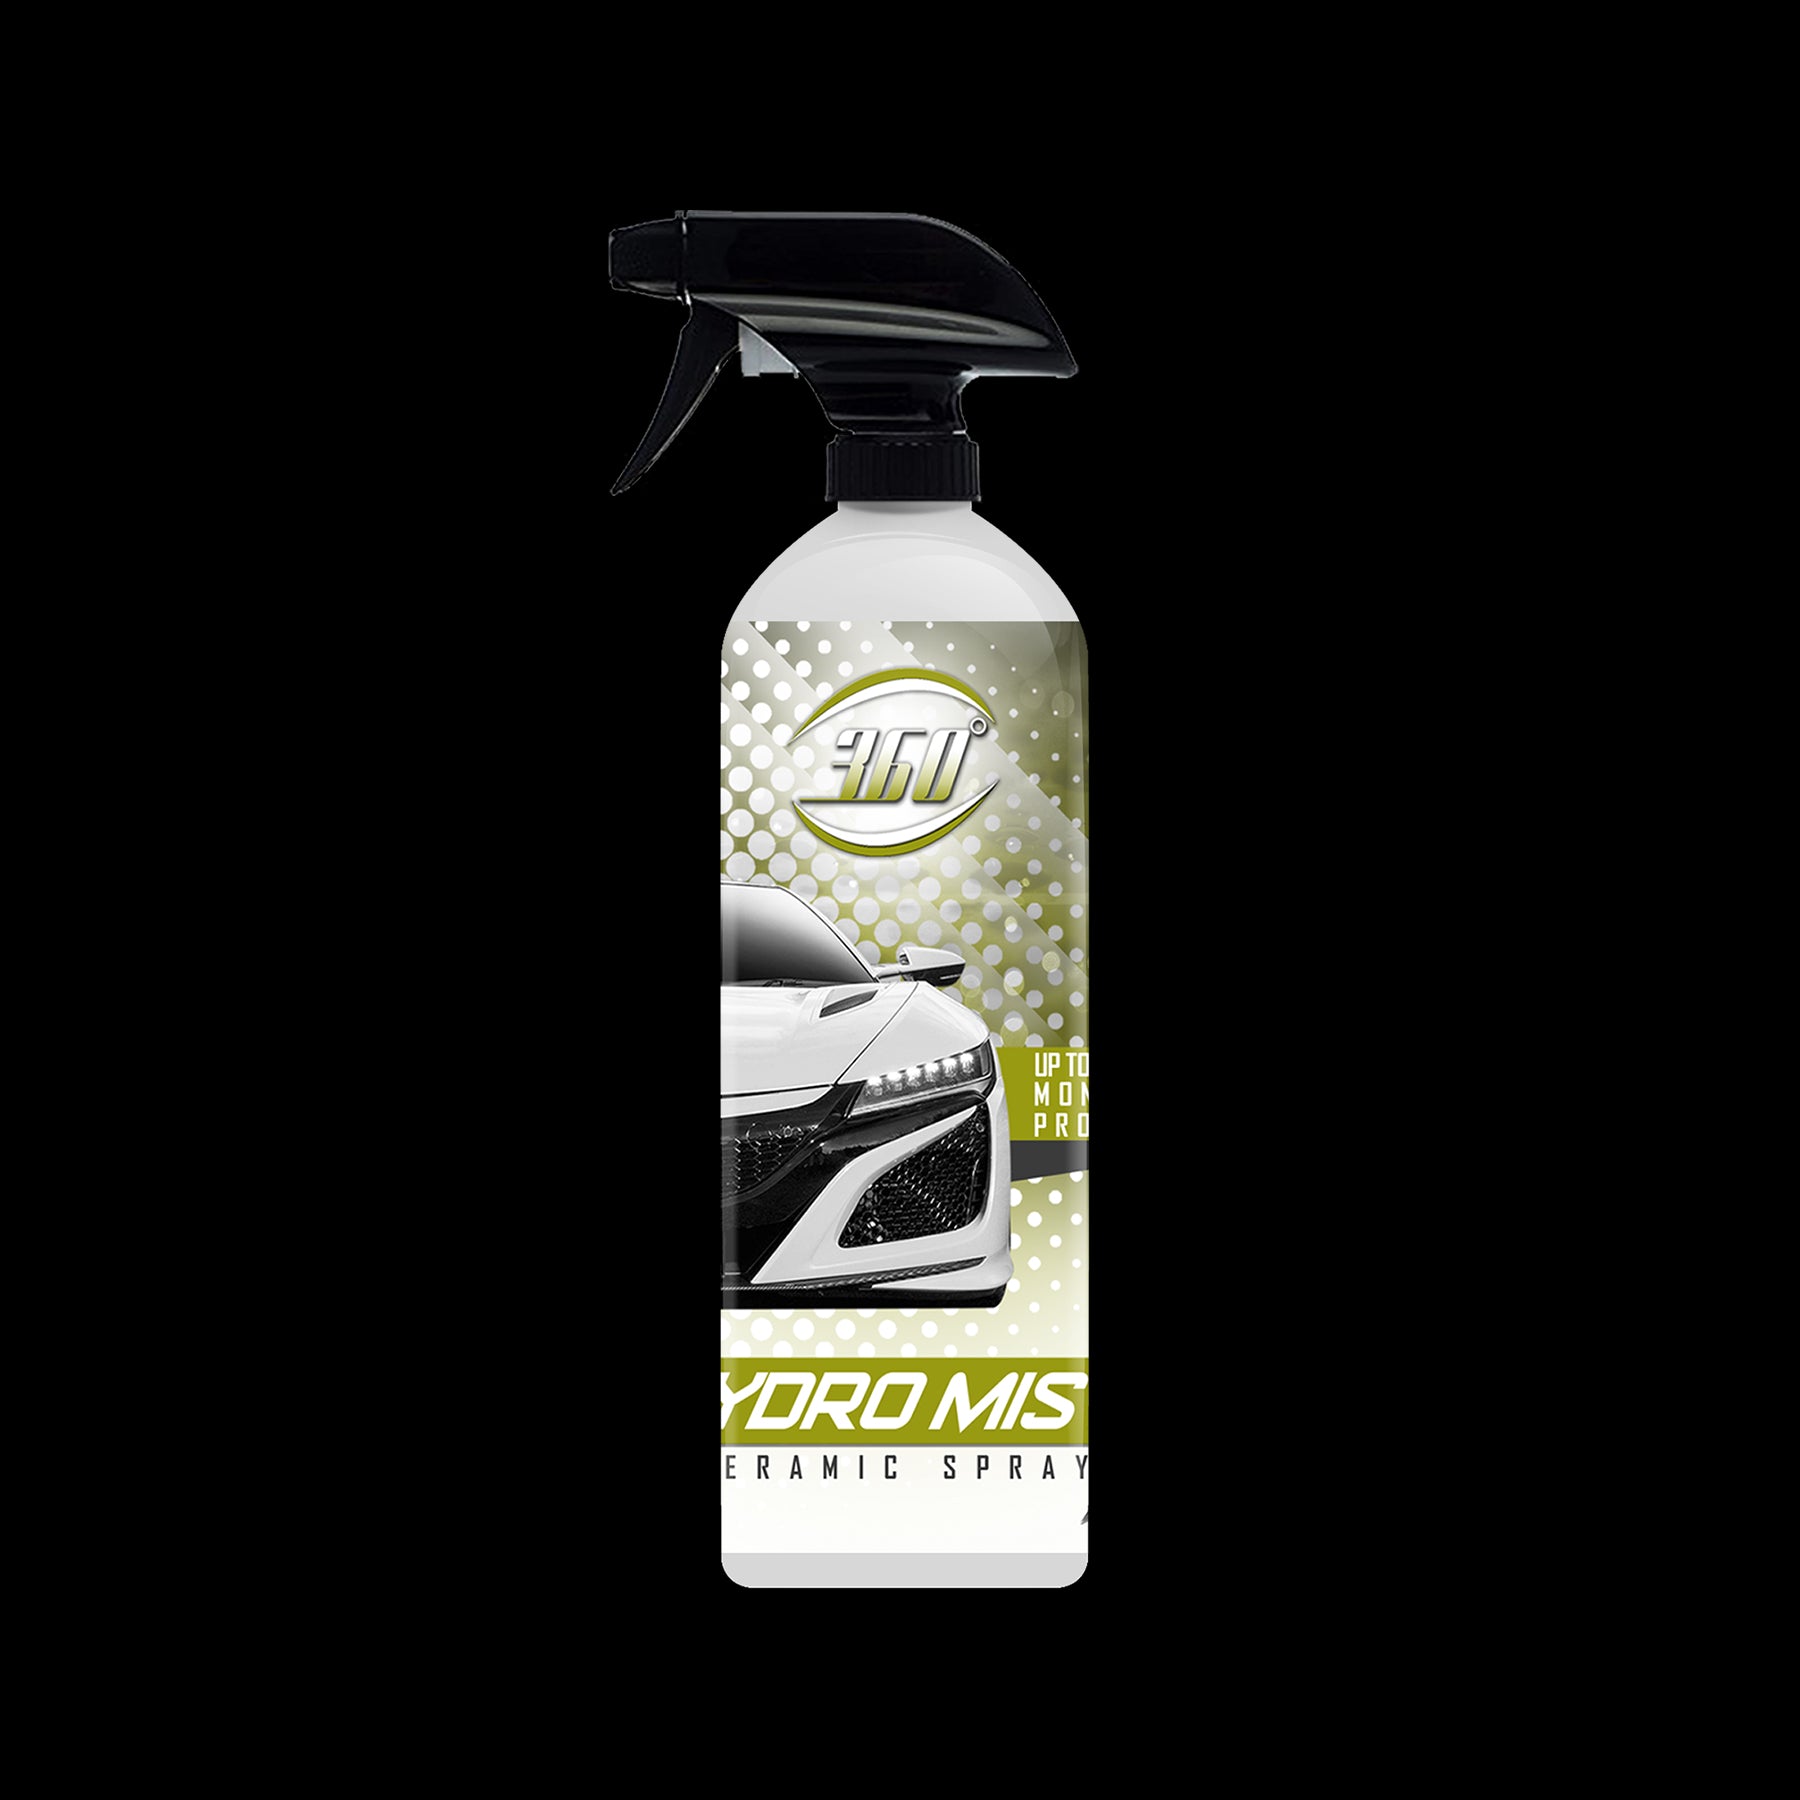 360 Hydro Mist Ceramic Spray – 360 PRODUCTS